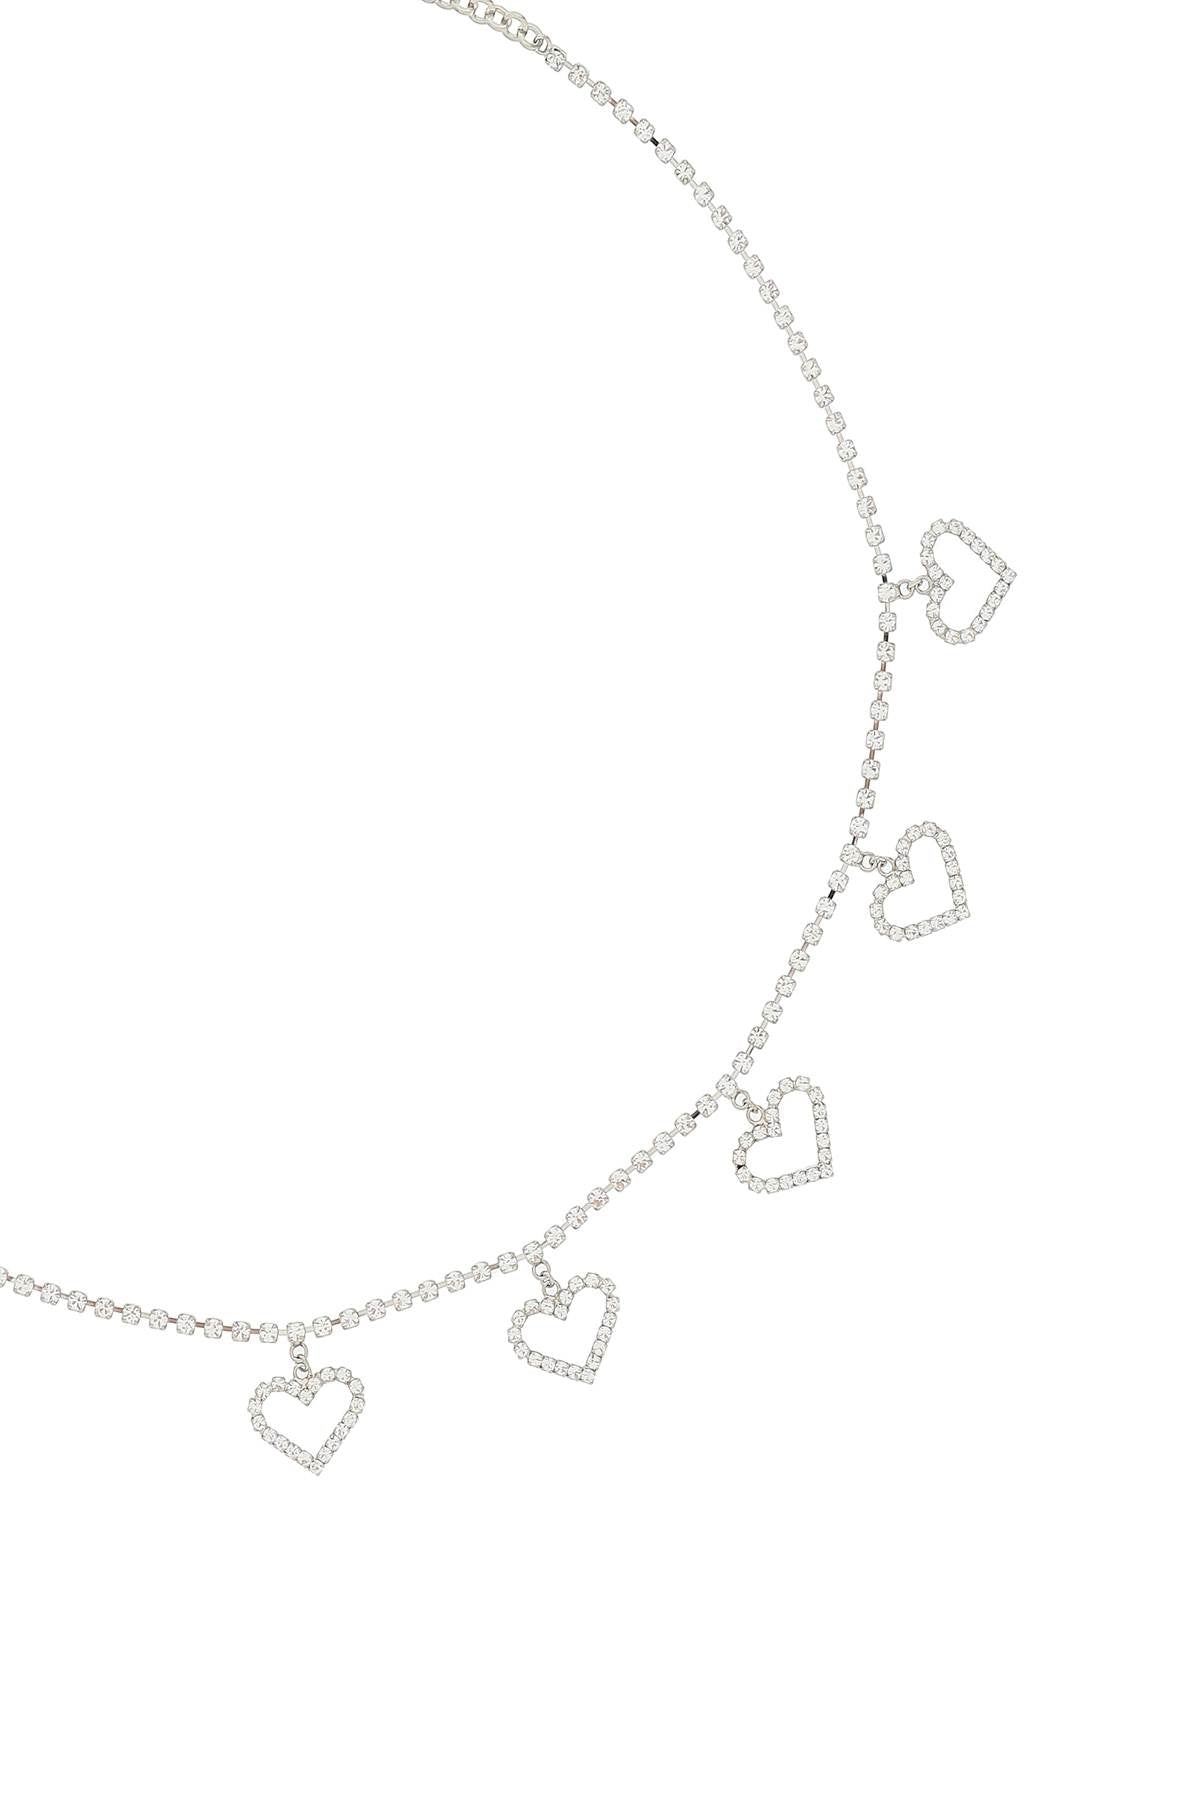 Alessandra rich crystal belt with heart pendants-2